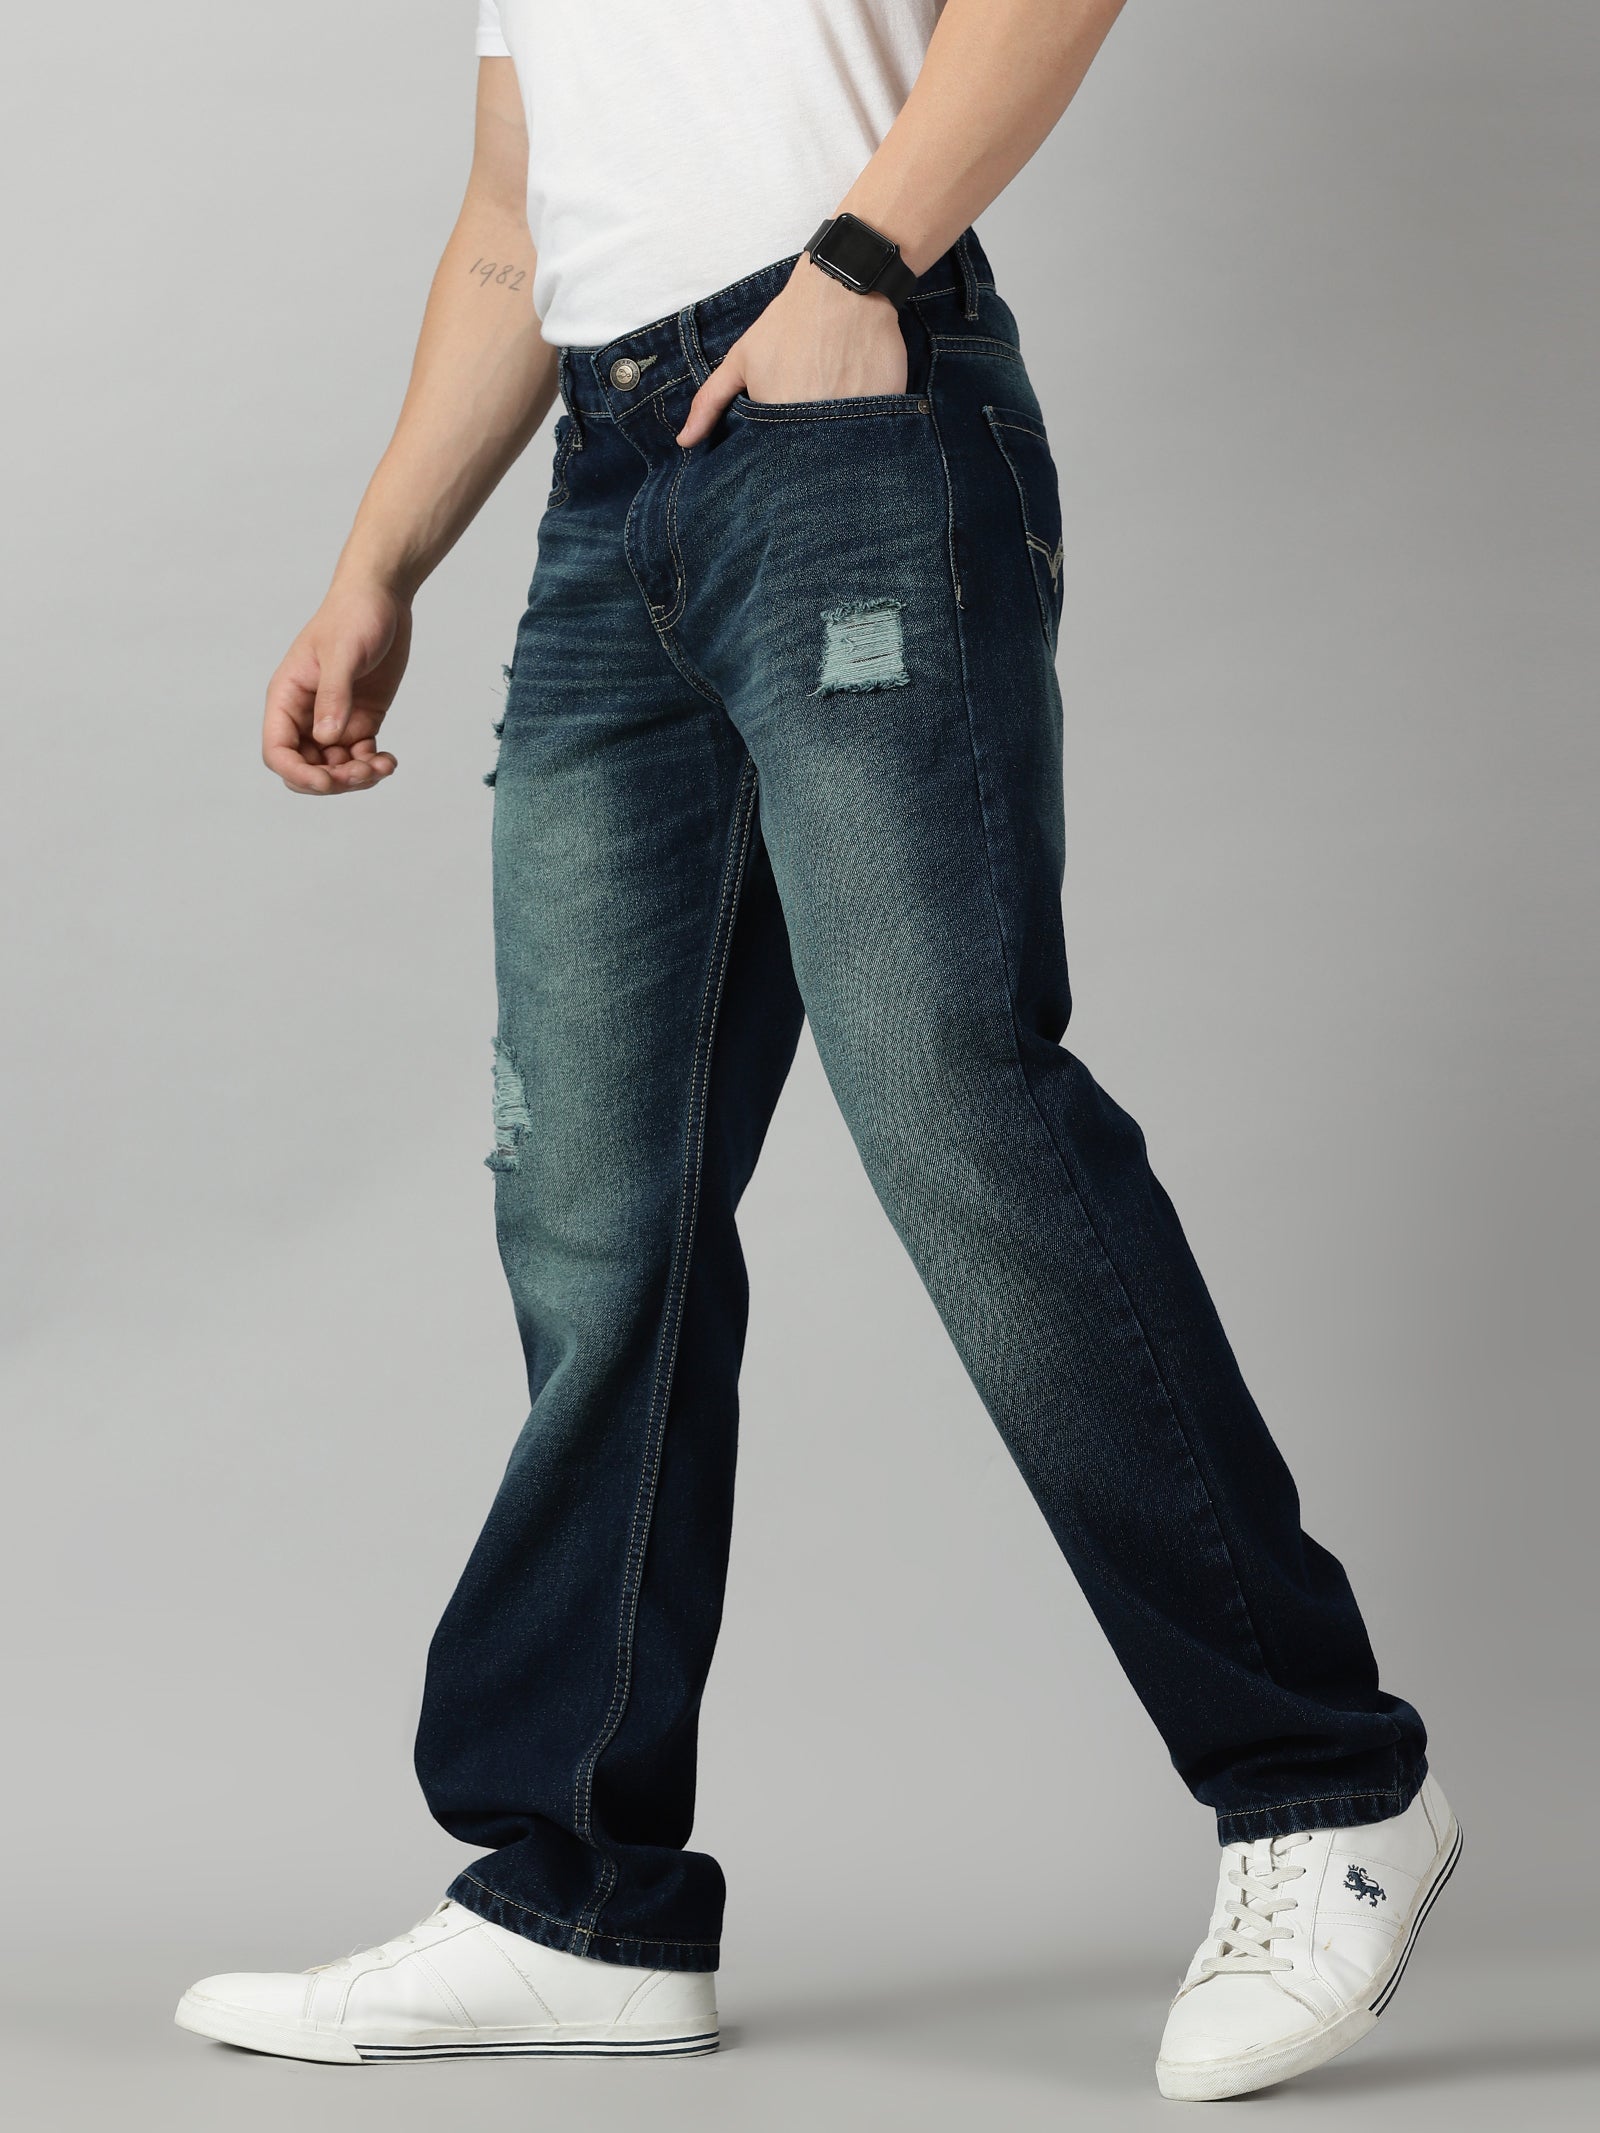 Denim men jeans, stock lot surplus jeans, denim jeans at Rs.750/Piece in  delhi offer by luxury dayz international